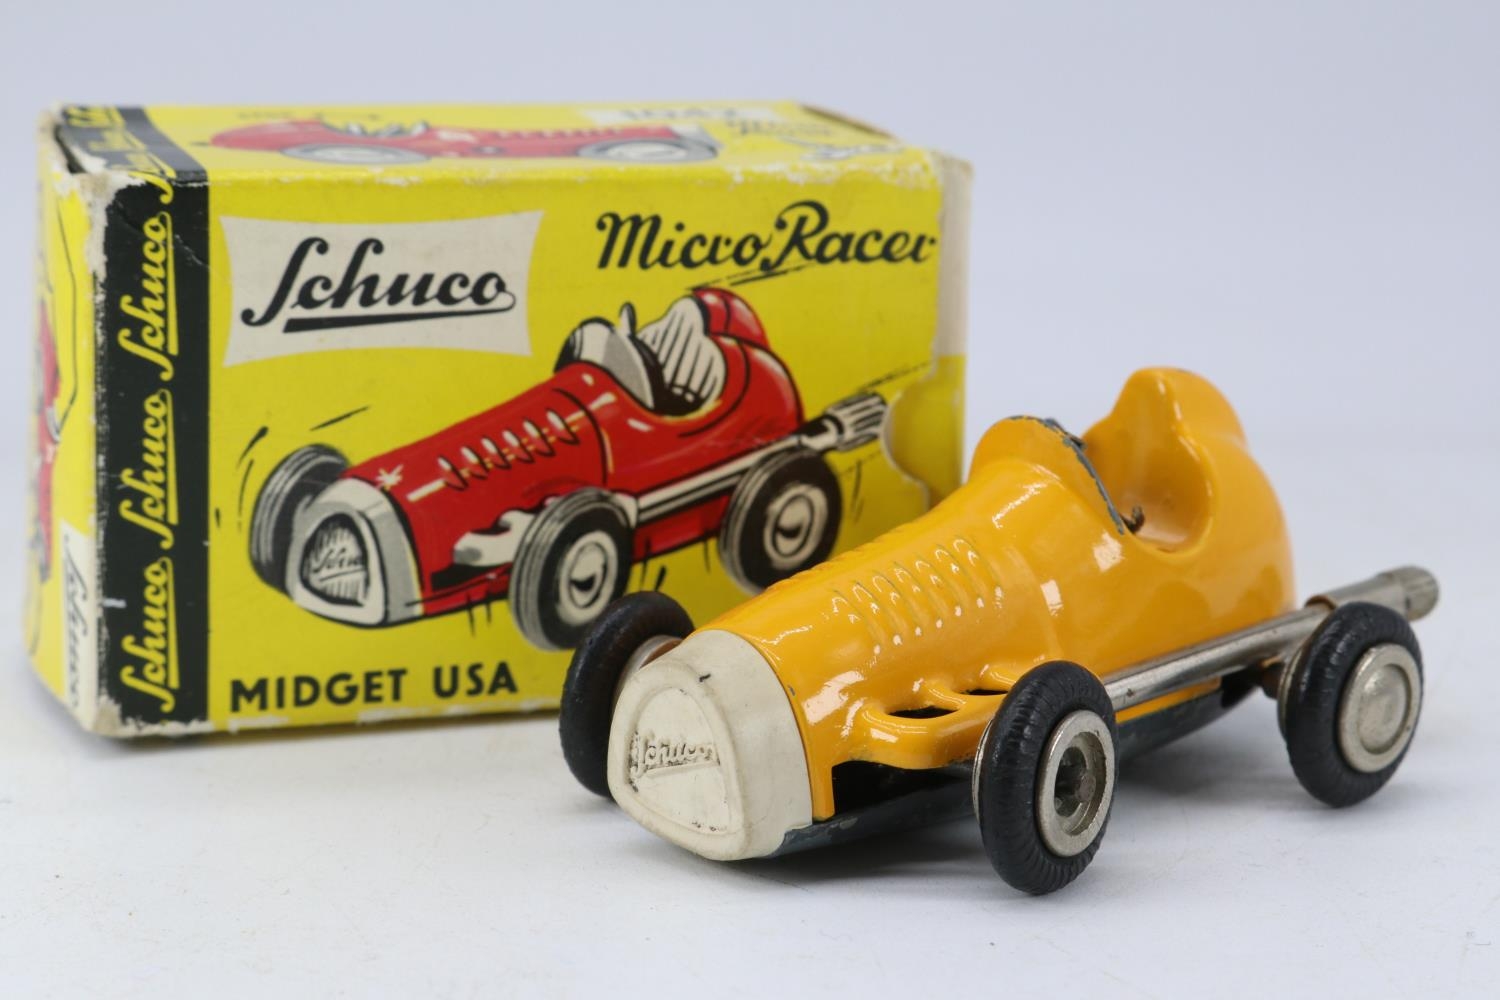 Schuco, micro racer Midget USA 1042 die cast vehicle with box